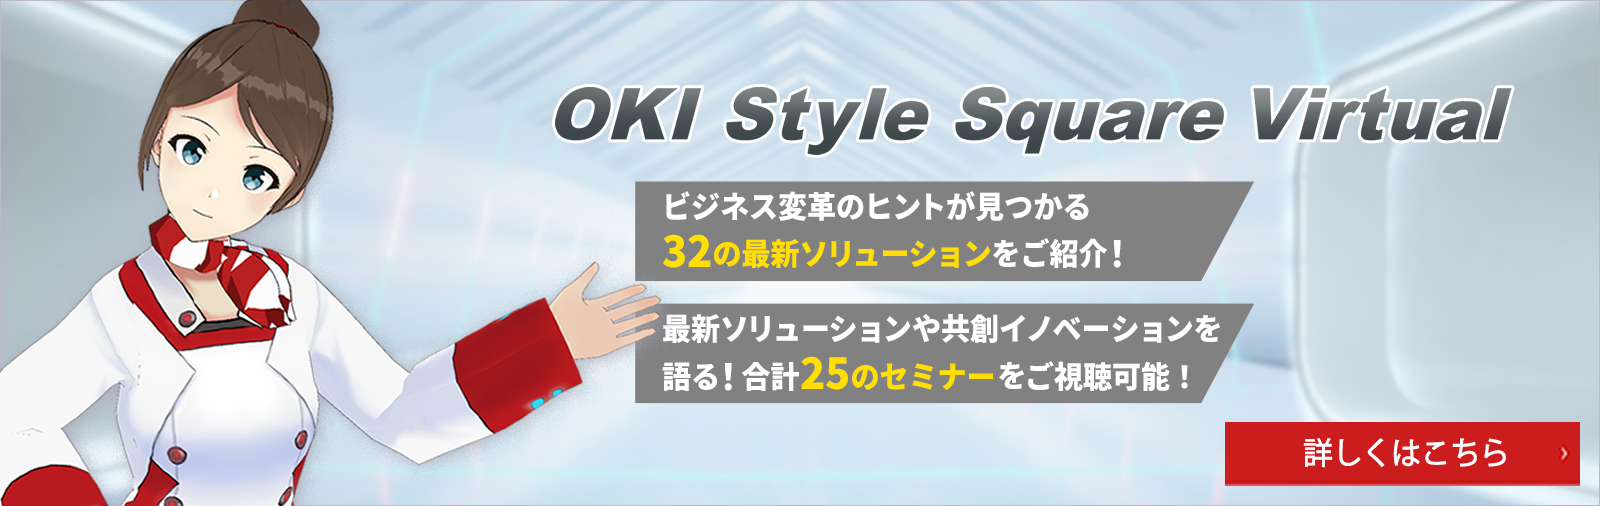 OKI Style Square Virtual 最新のソリューションやサービスをご紹介